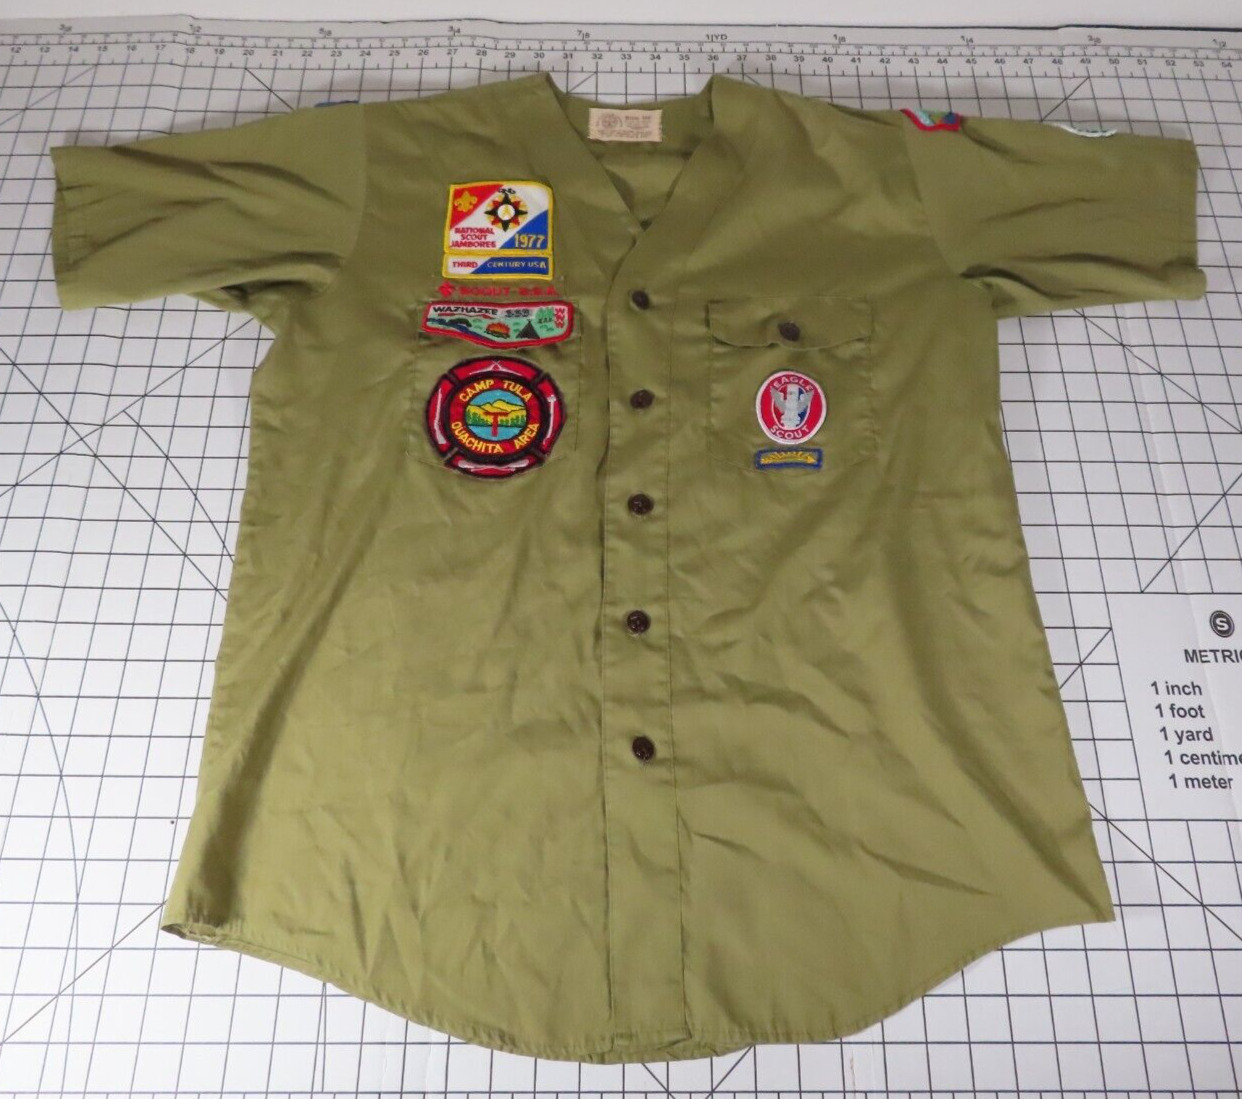 VTG Olive Drab Green BSA Boy Scouts Short Sleeve Uniform Shirt Eagle Patch 1970s